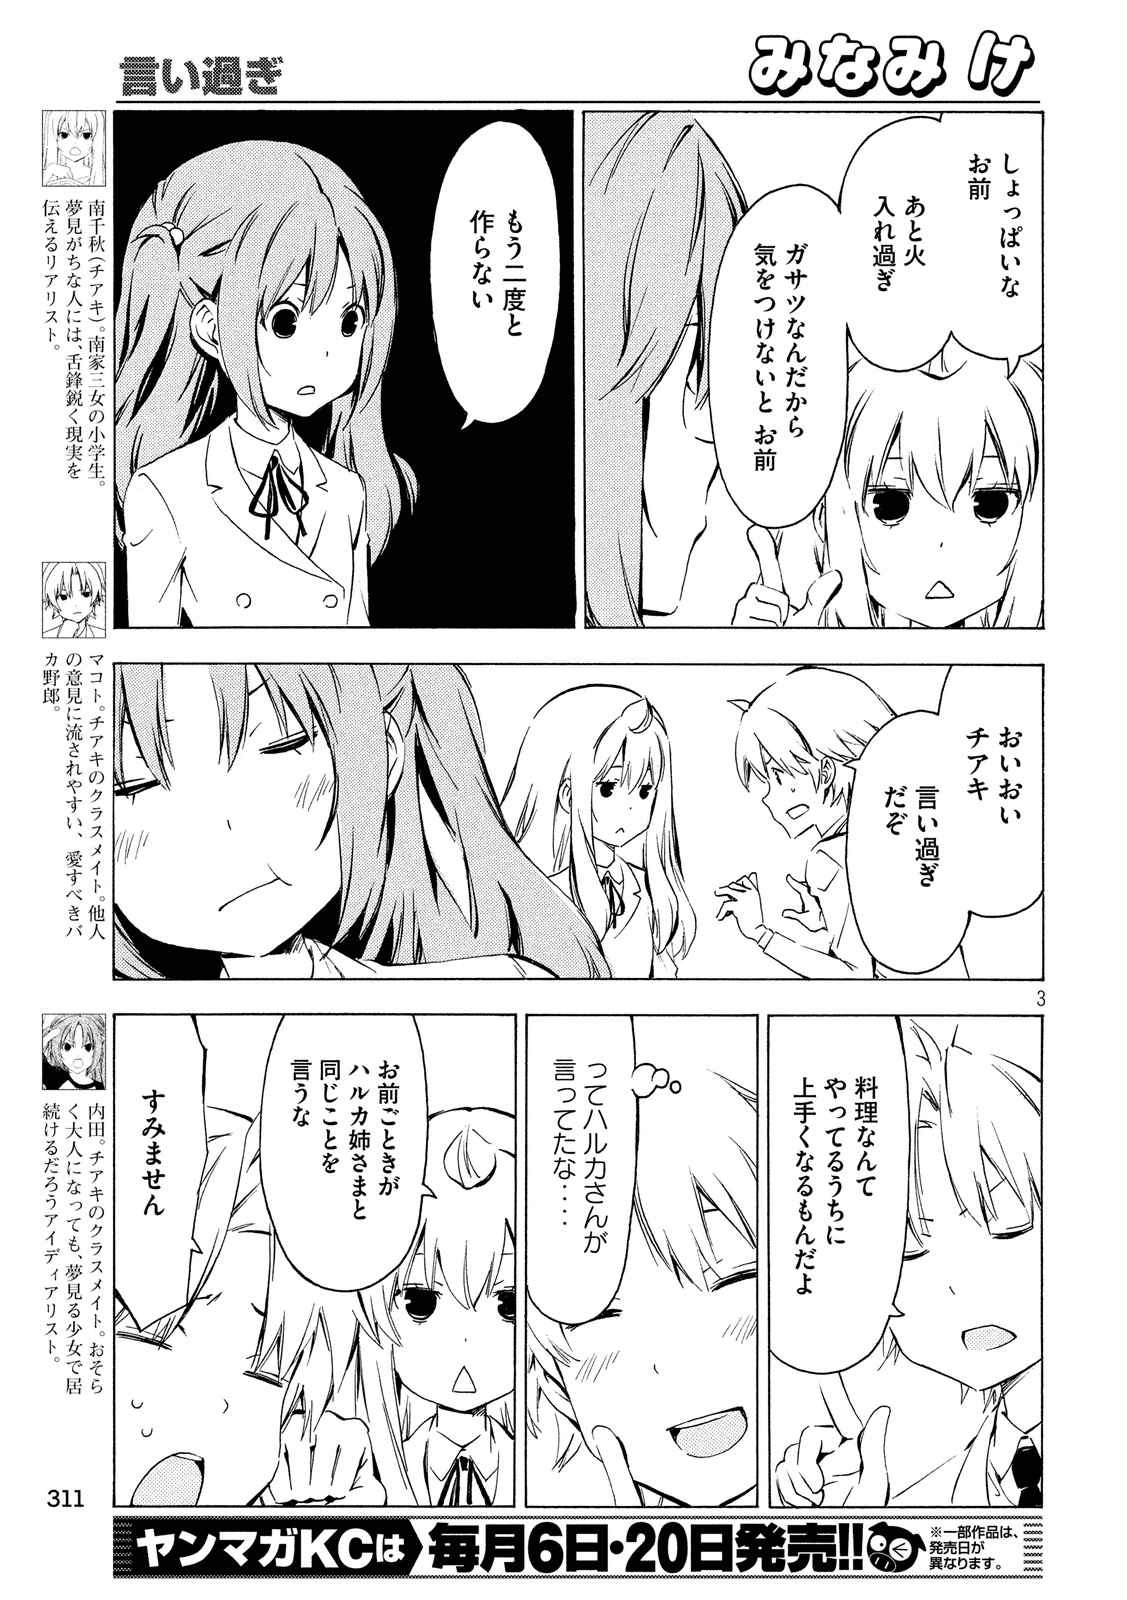 Minami-ke - Chapter 312 - Page 3